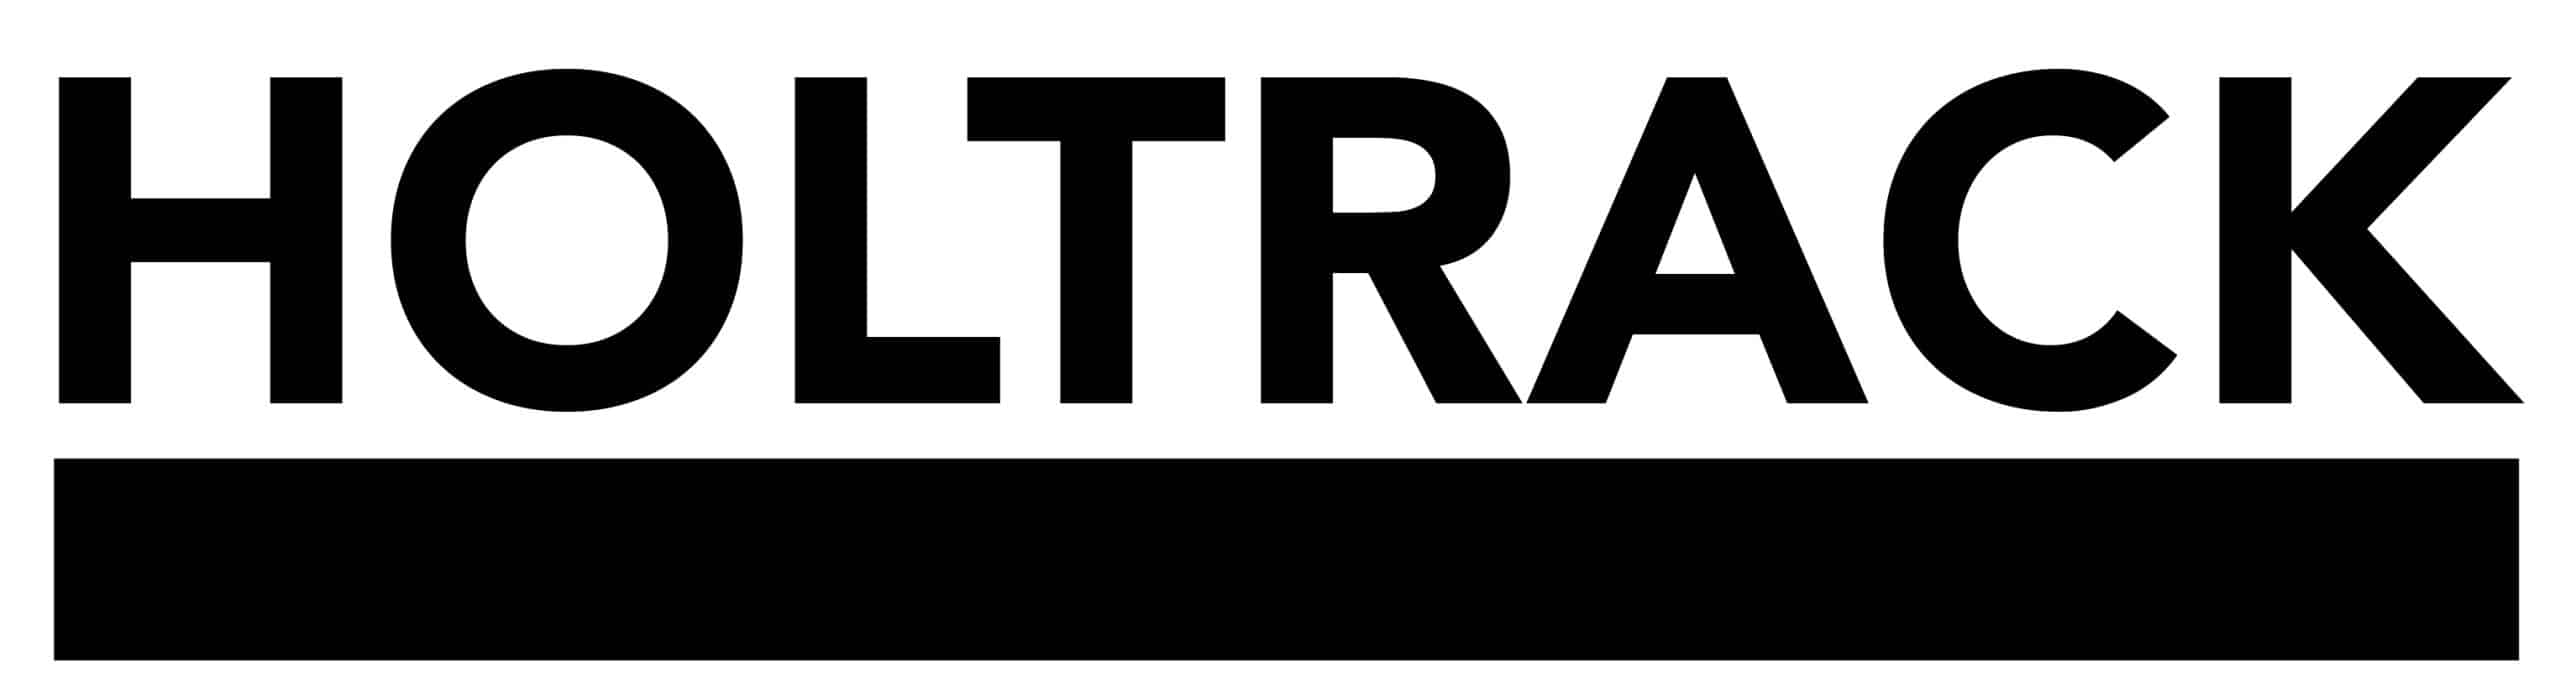 holtrack logo white 07 1 scaled